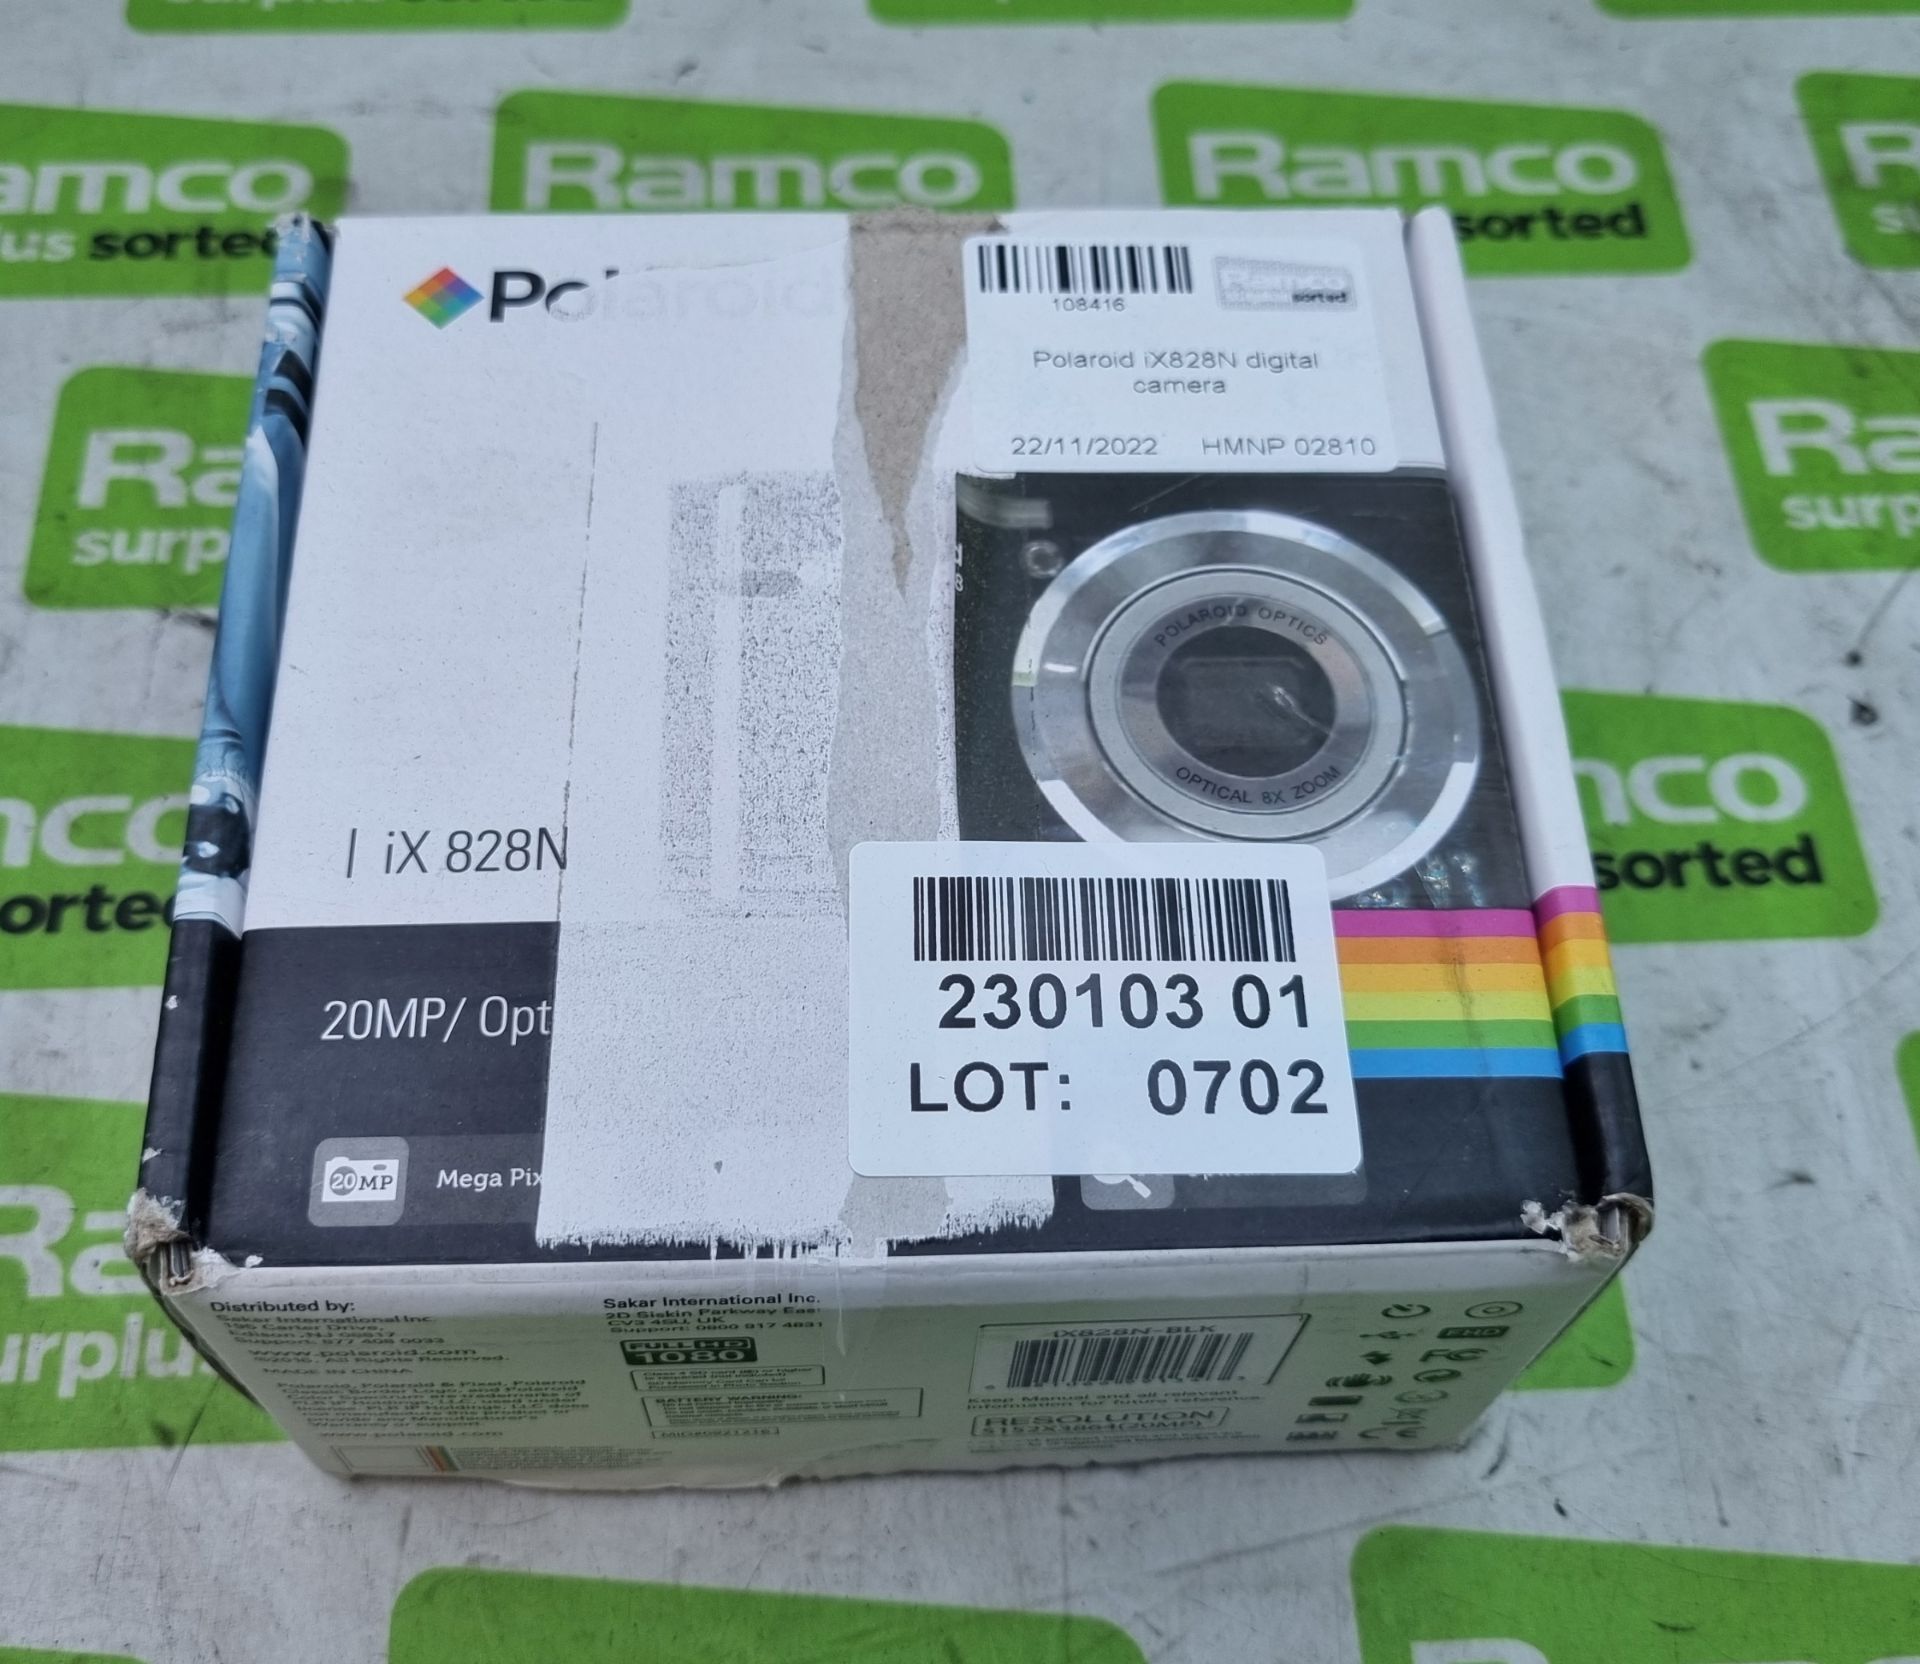 Polaroid iX828N digital camera